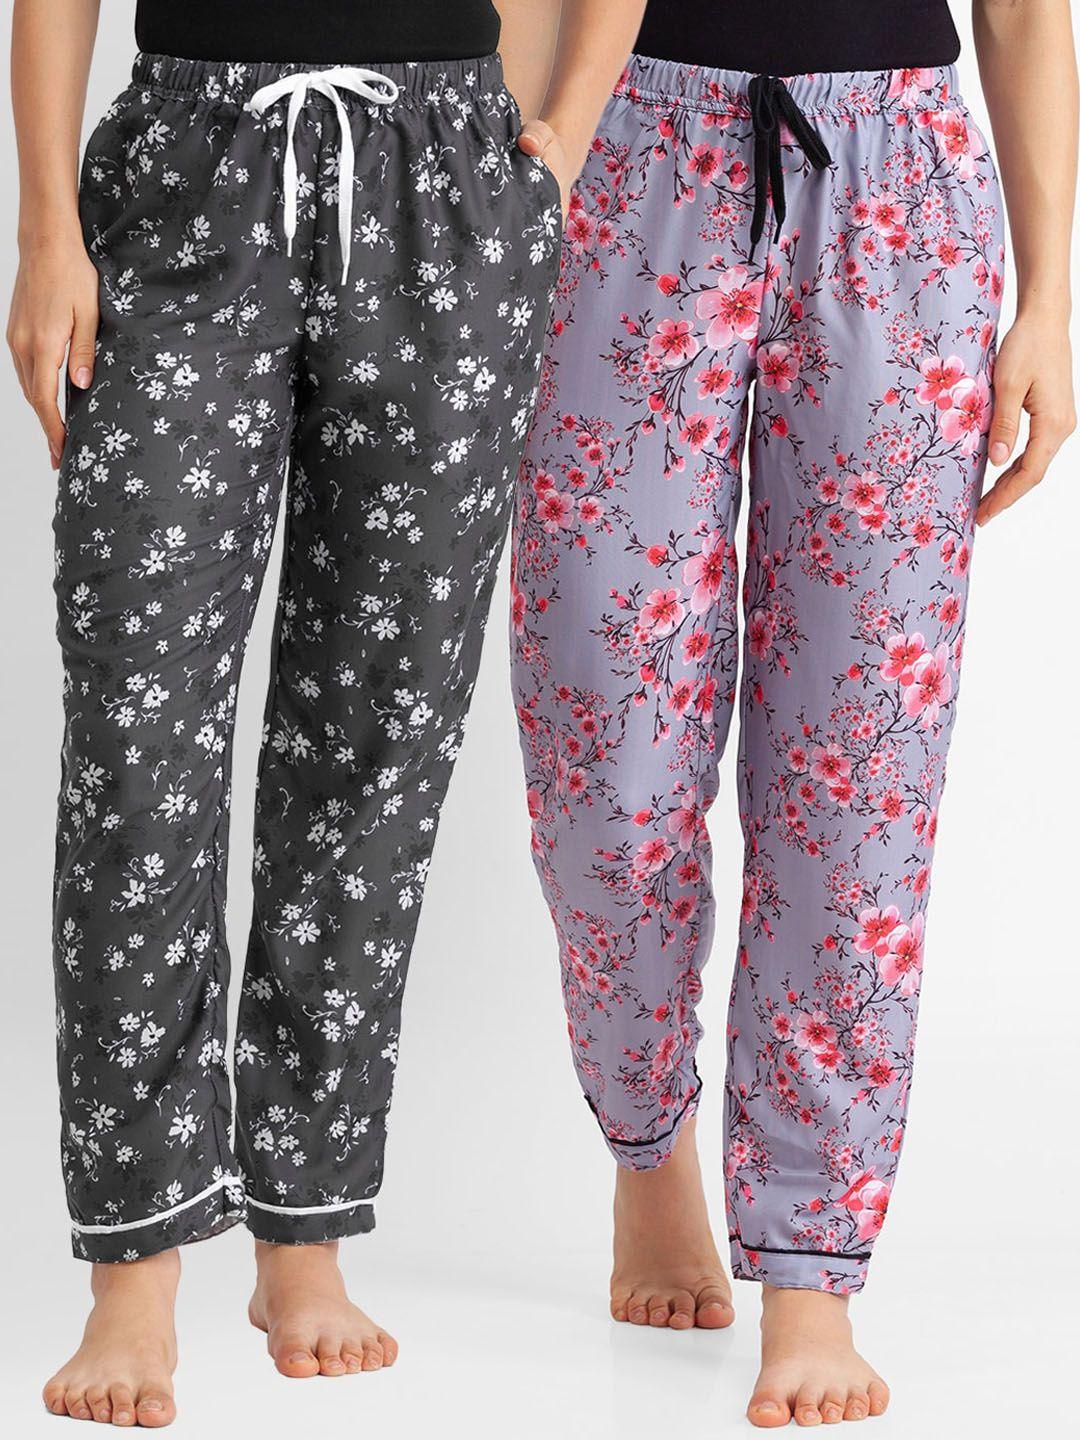 fashionrack women set of 2 grey and charcoal floral printed cotton pajamas